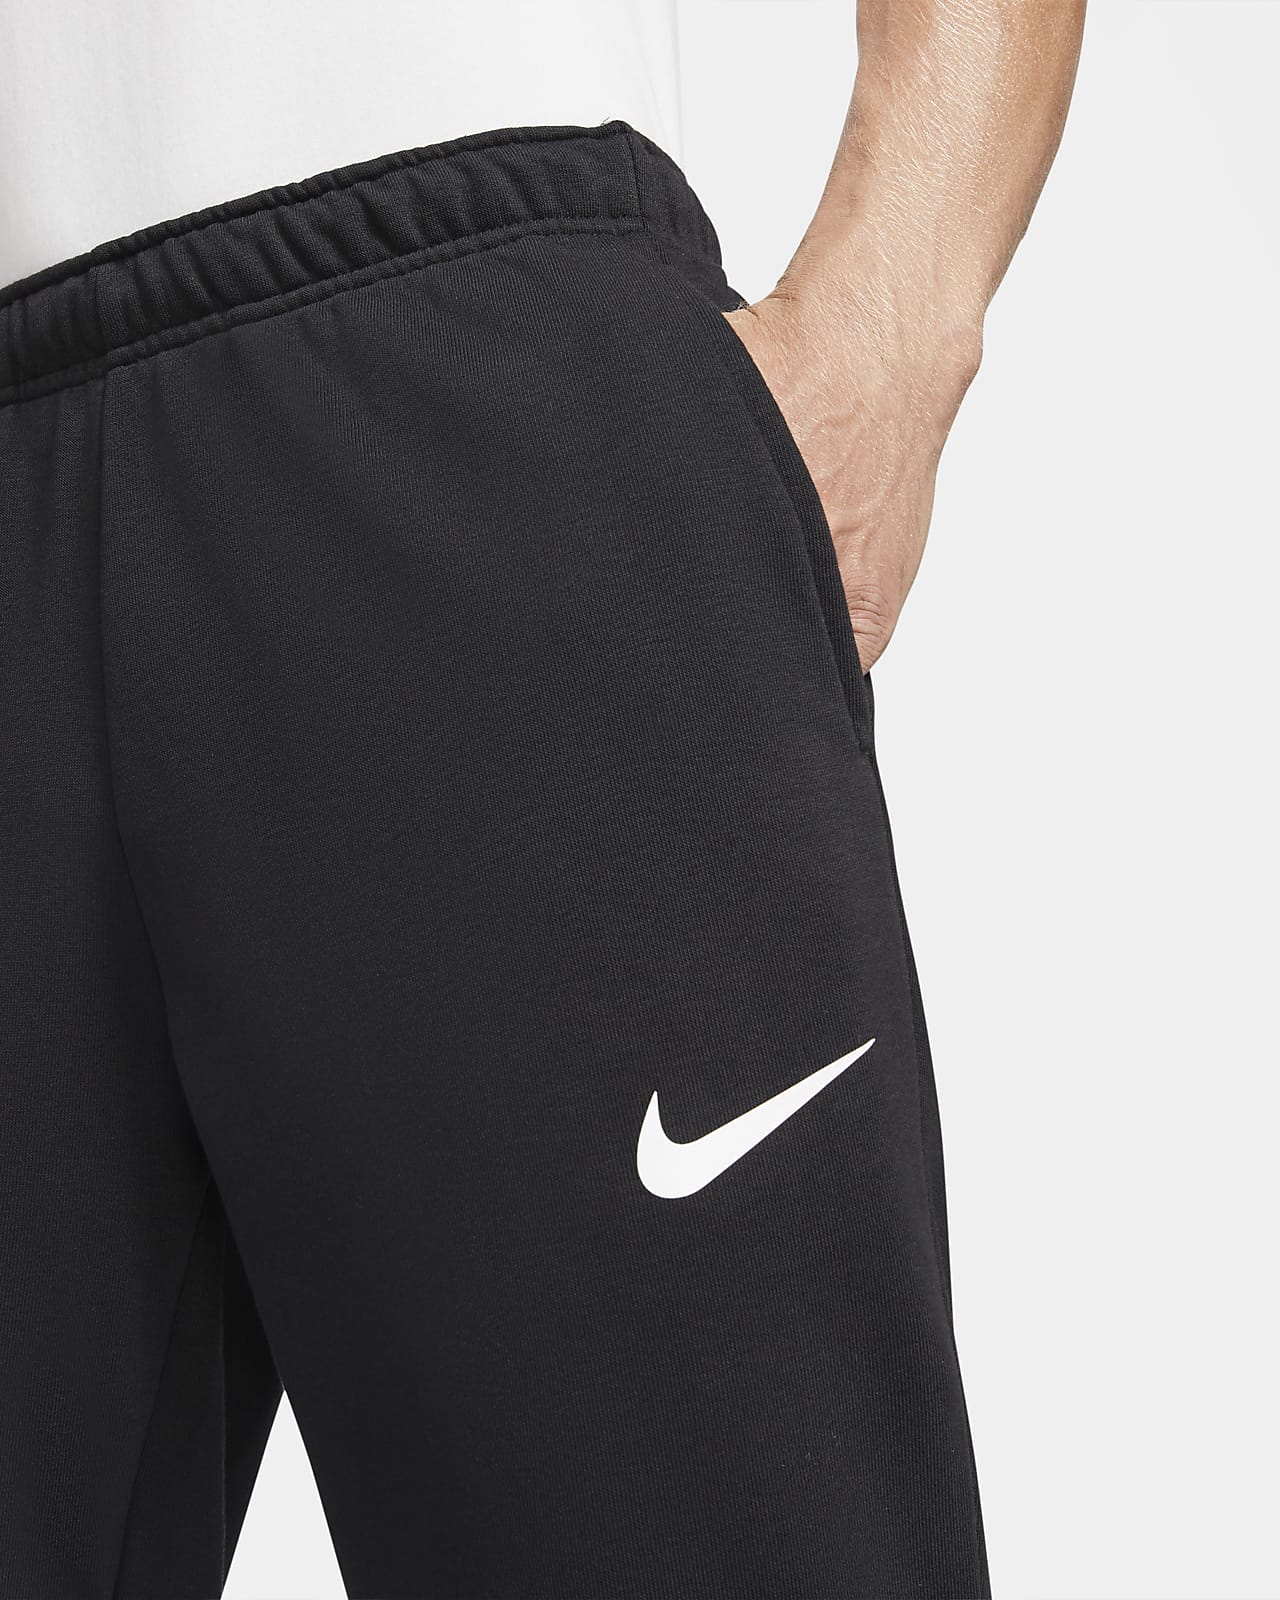 Nike Training Dry tapered fleece sweatpants in black